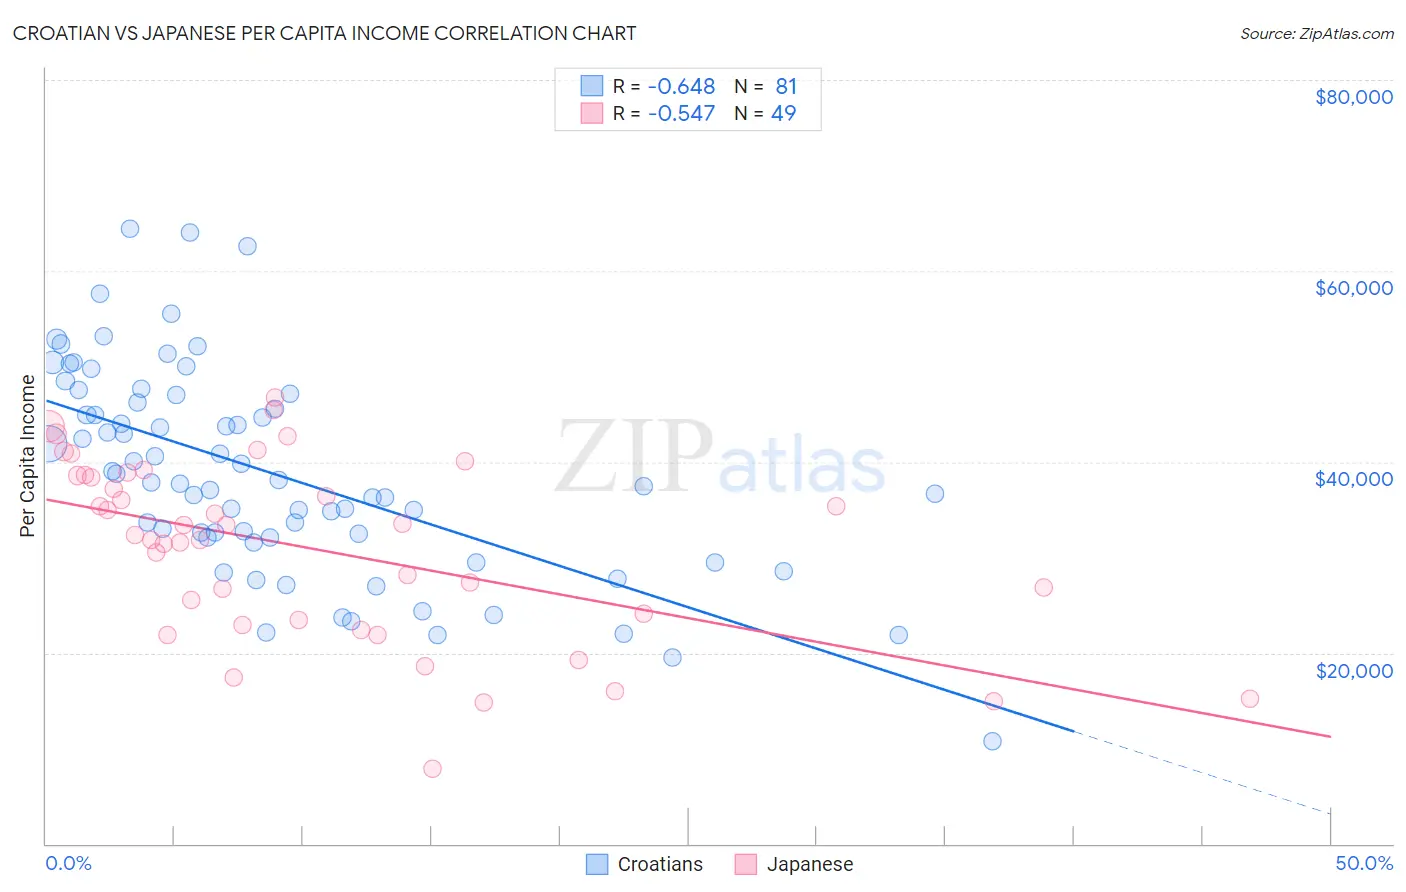 Croatian vs Japanese Per Capita Income